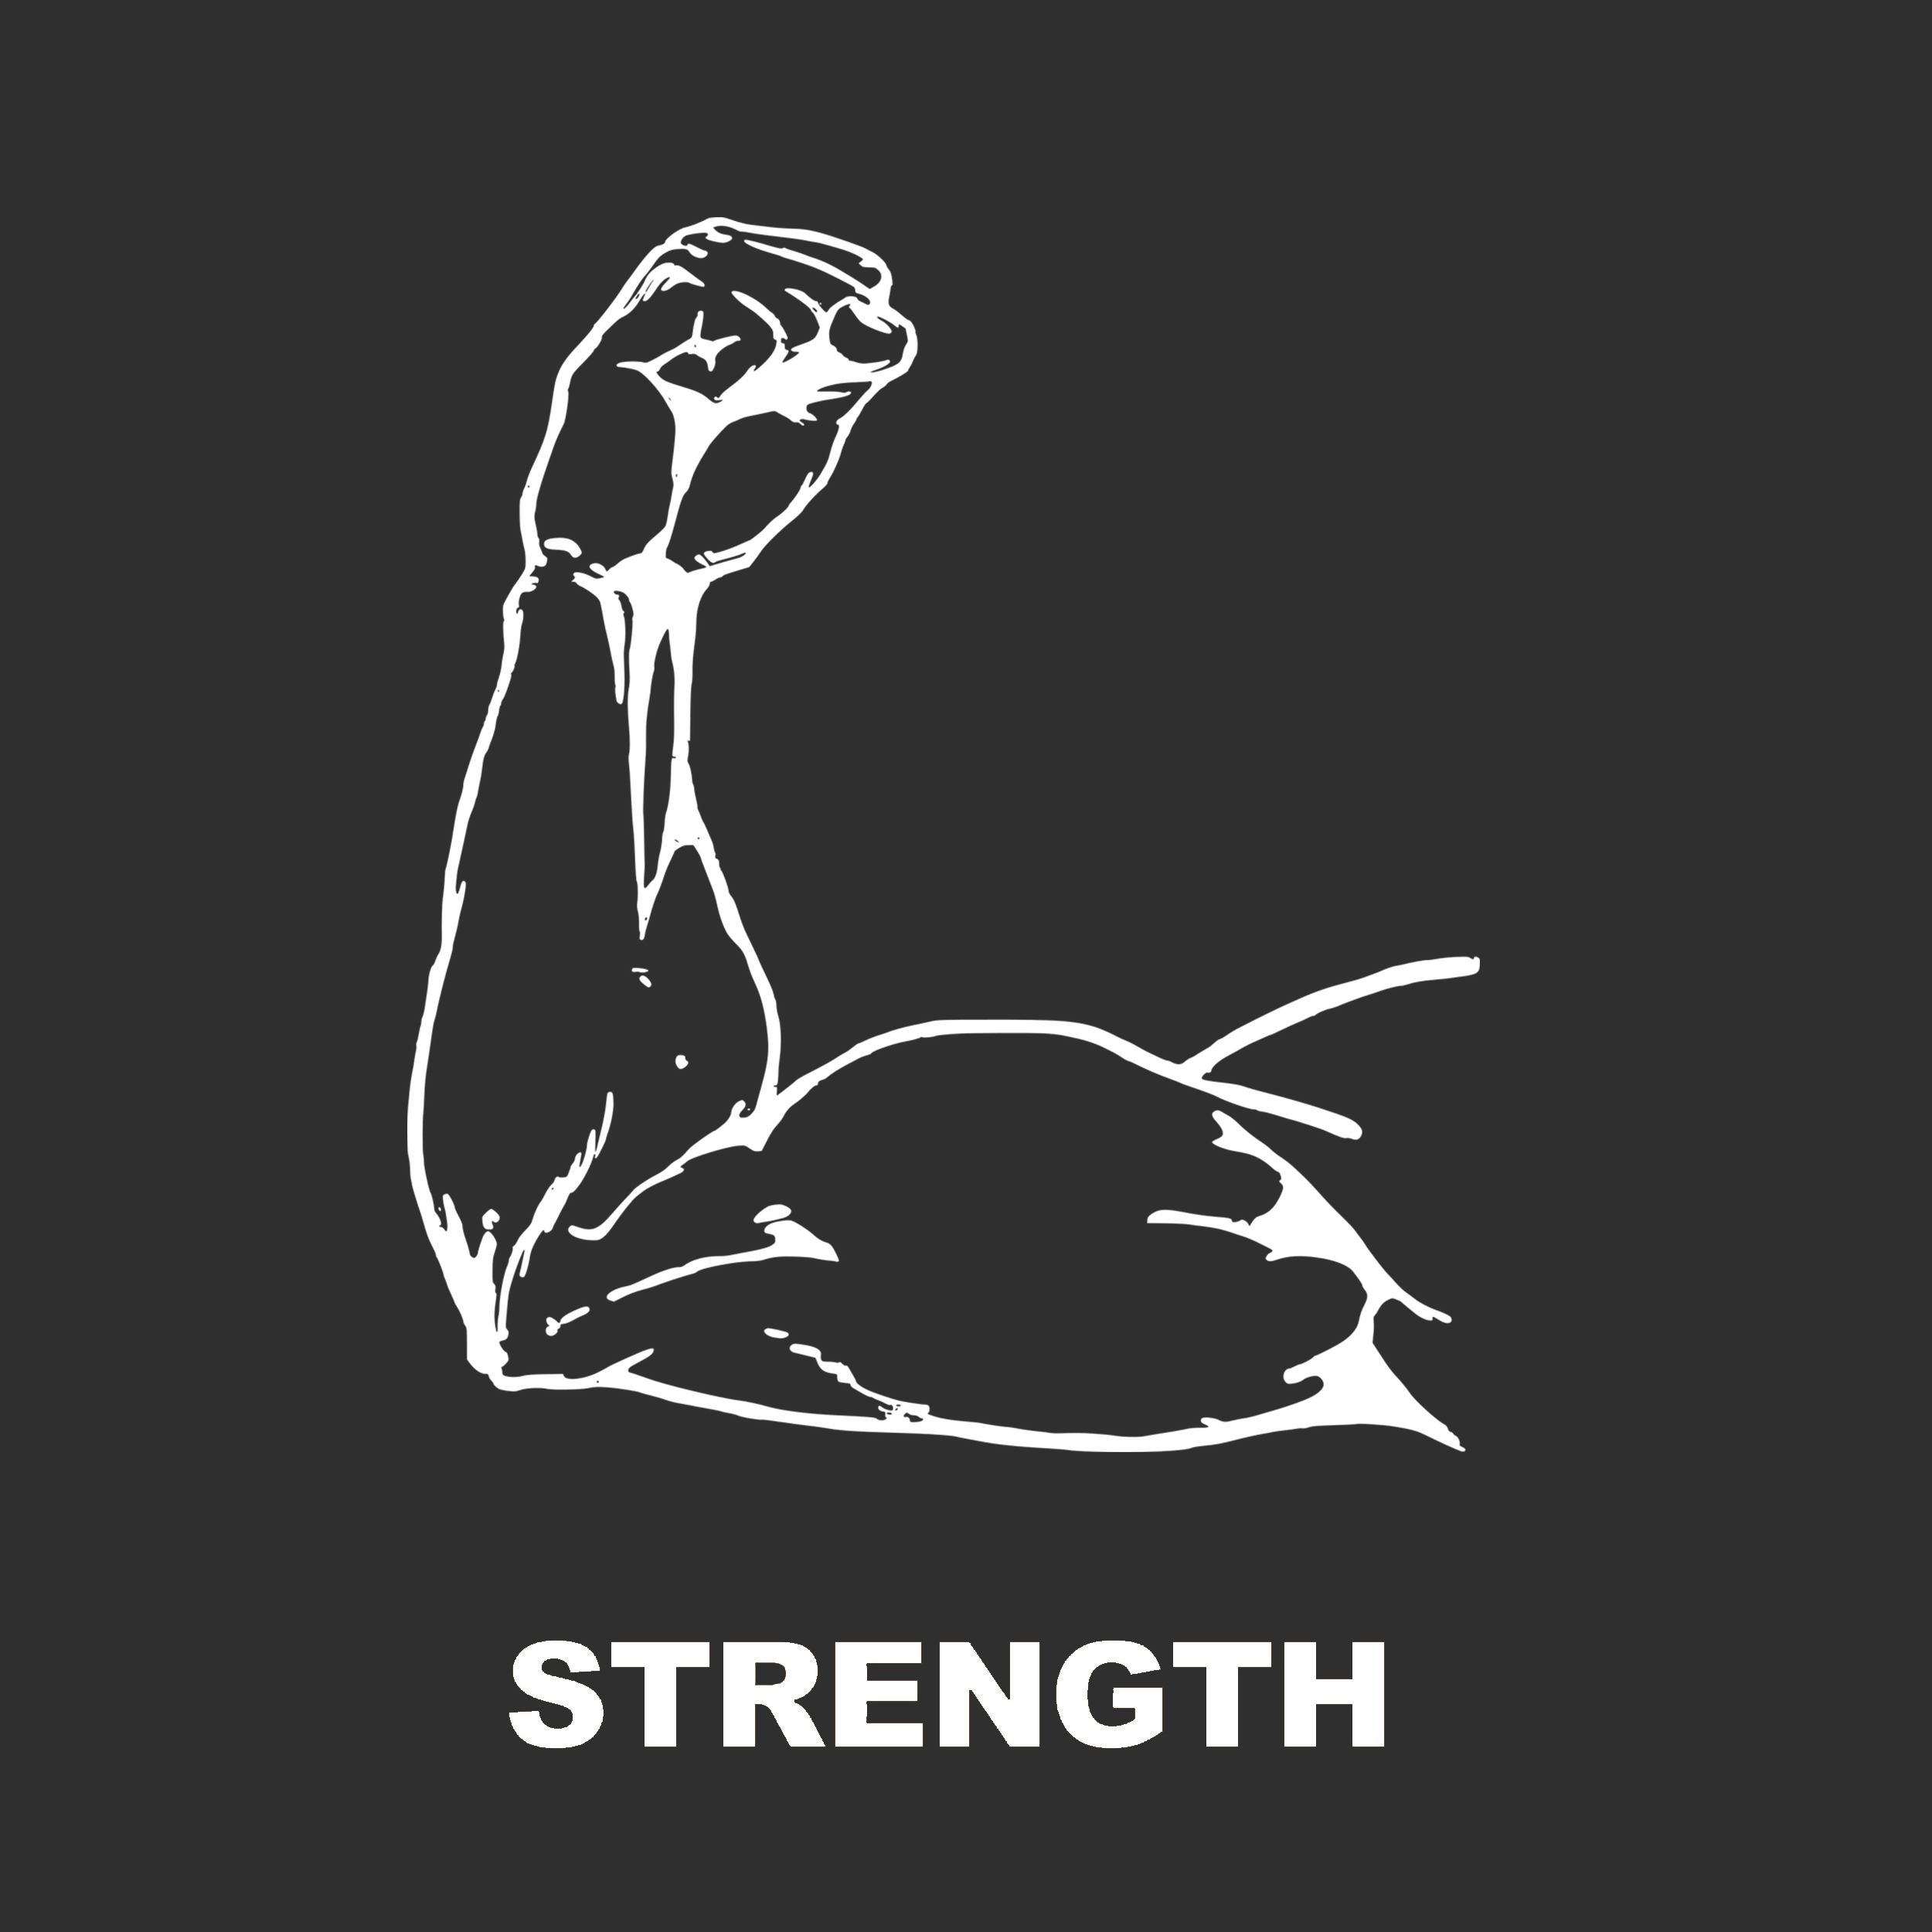 strength.jpg